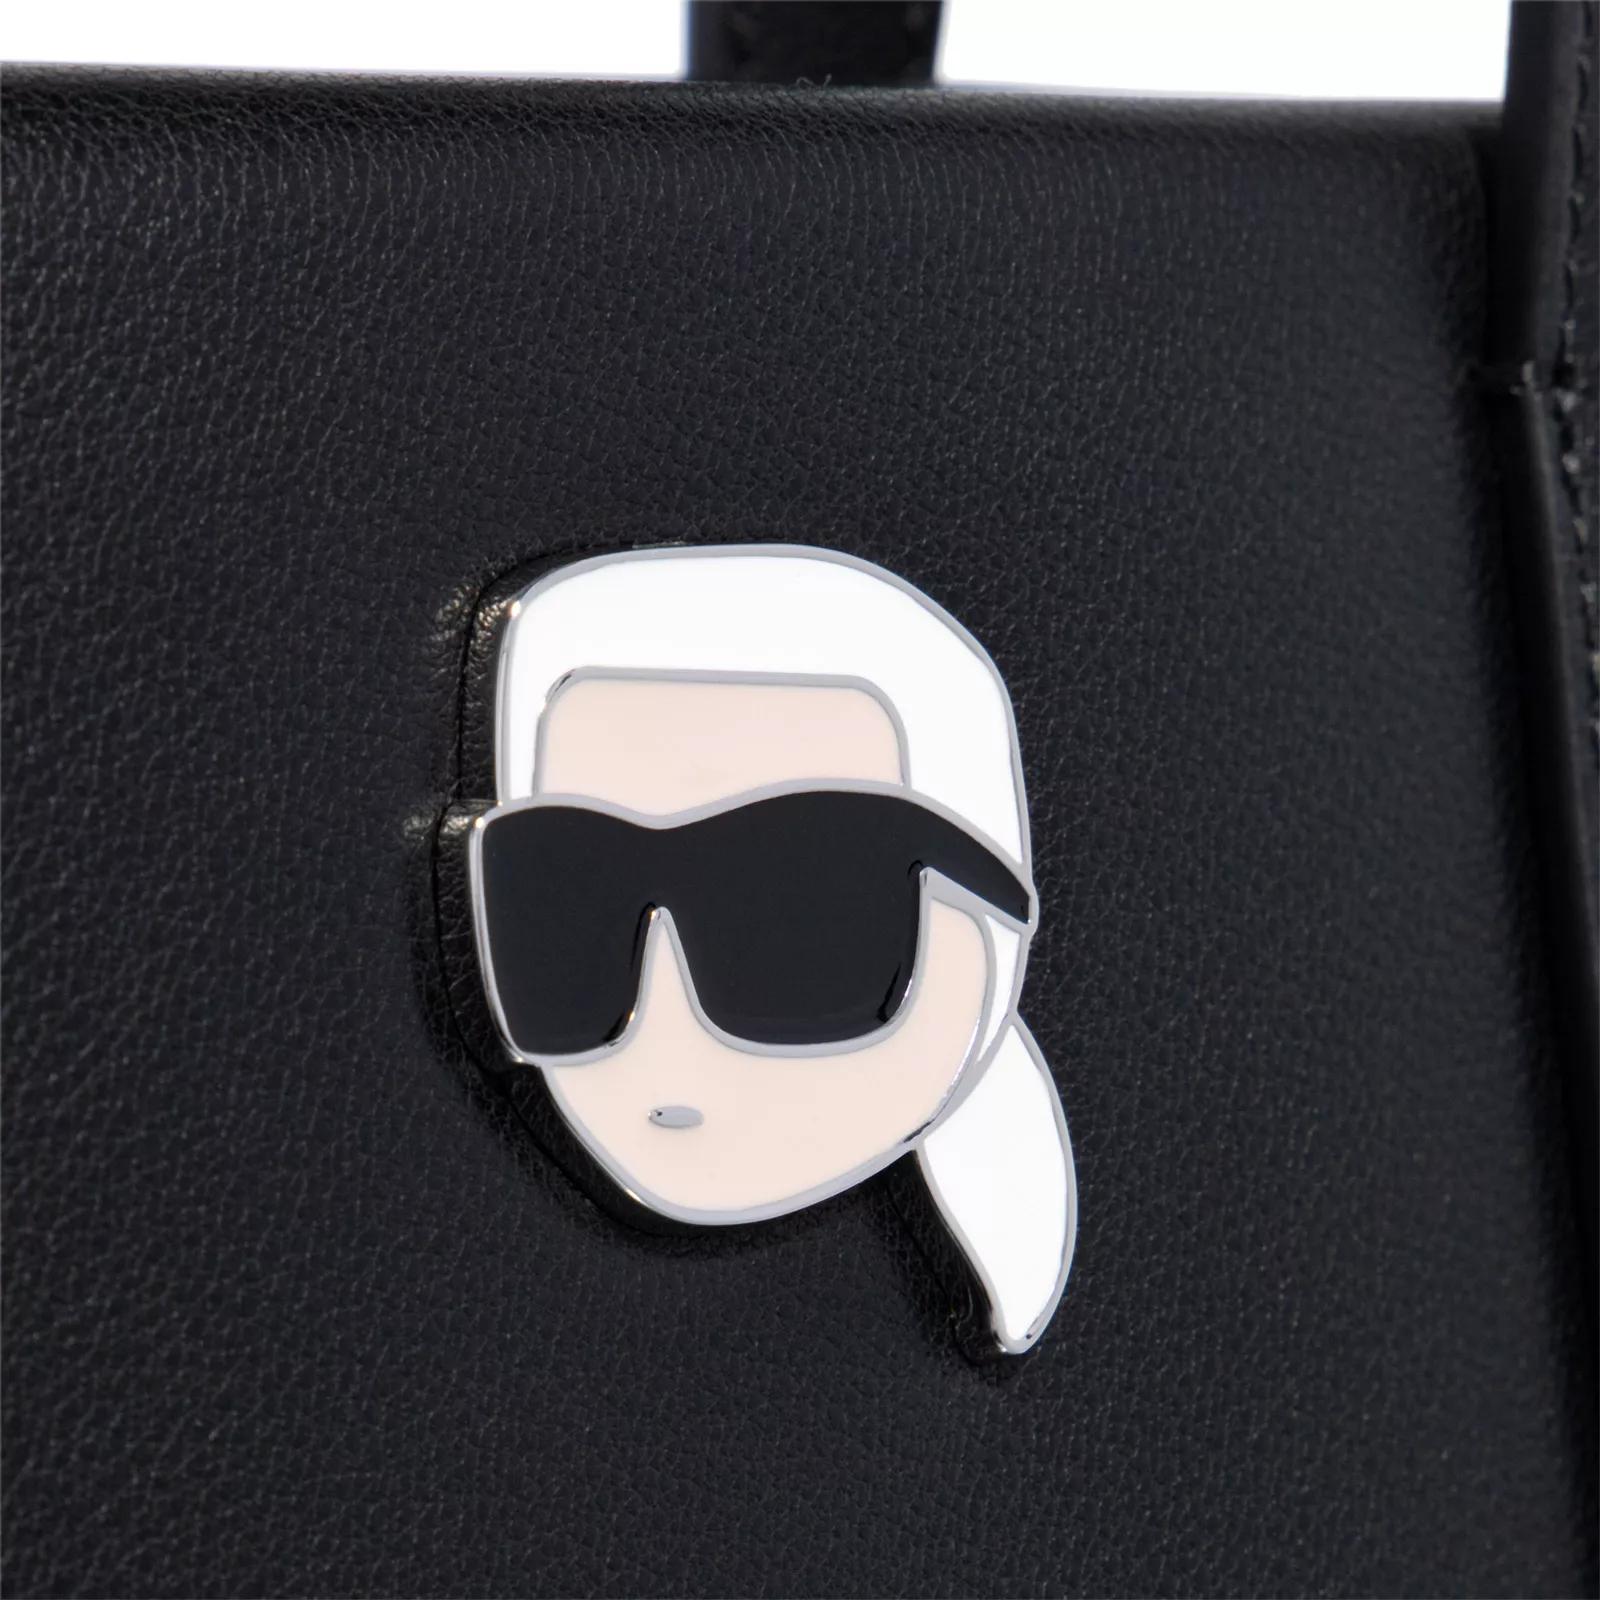 Karl Lagerfeld Shoppers K Ikonik 2.0 Leather Tote Pin in zwart